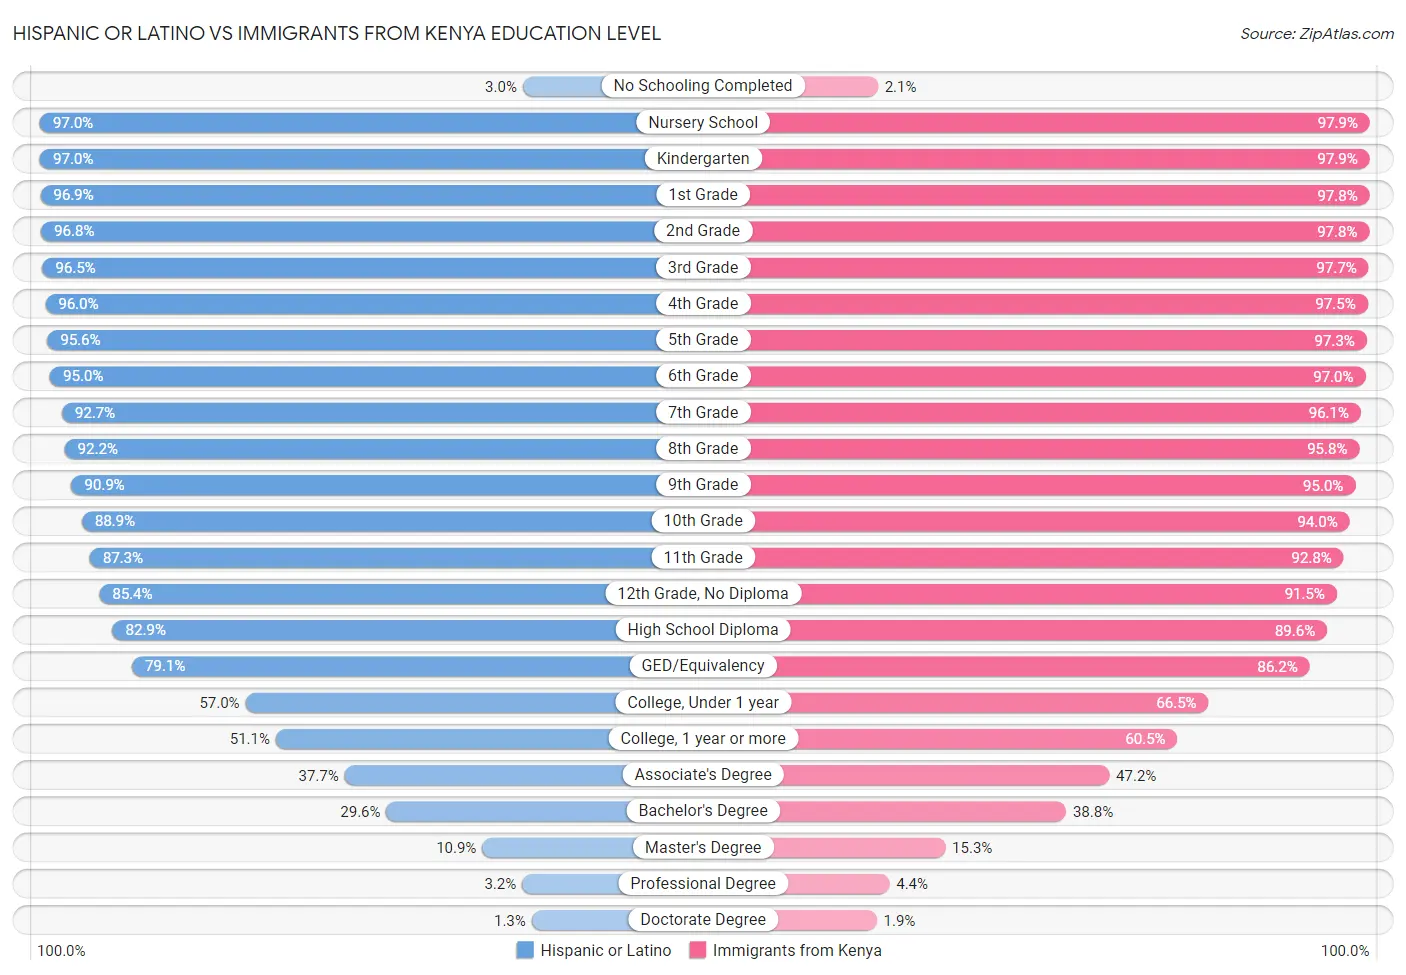 Hispanic or Latino vs Immigrants from Kenya Education Level